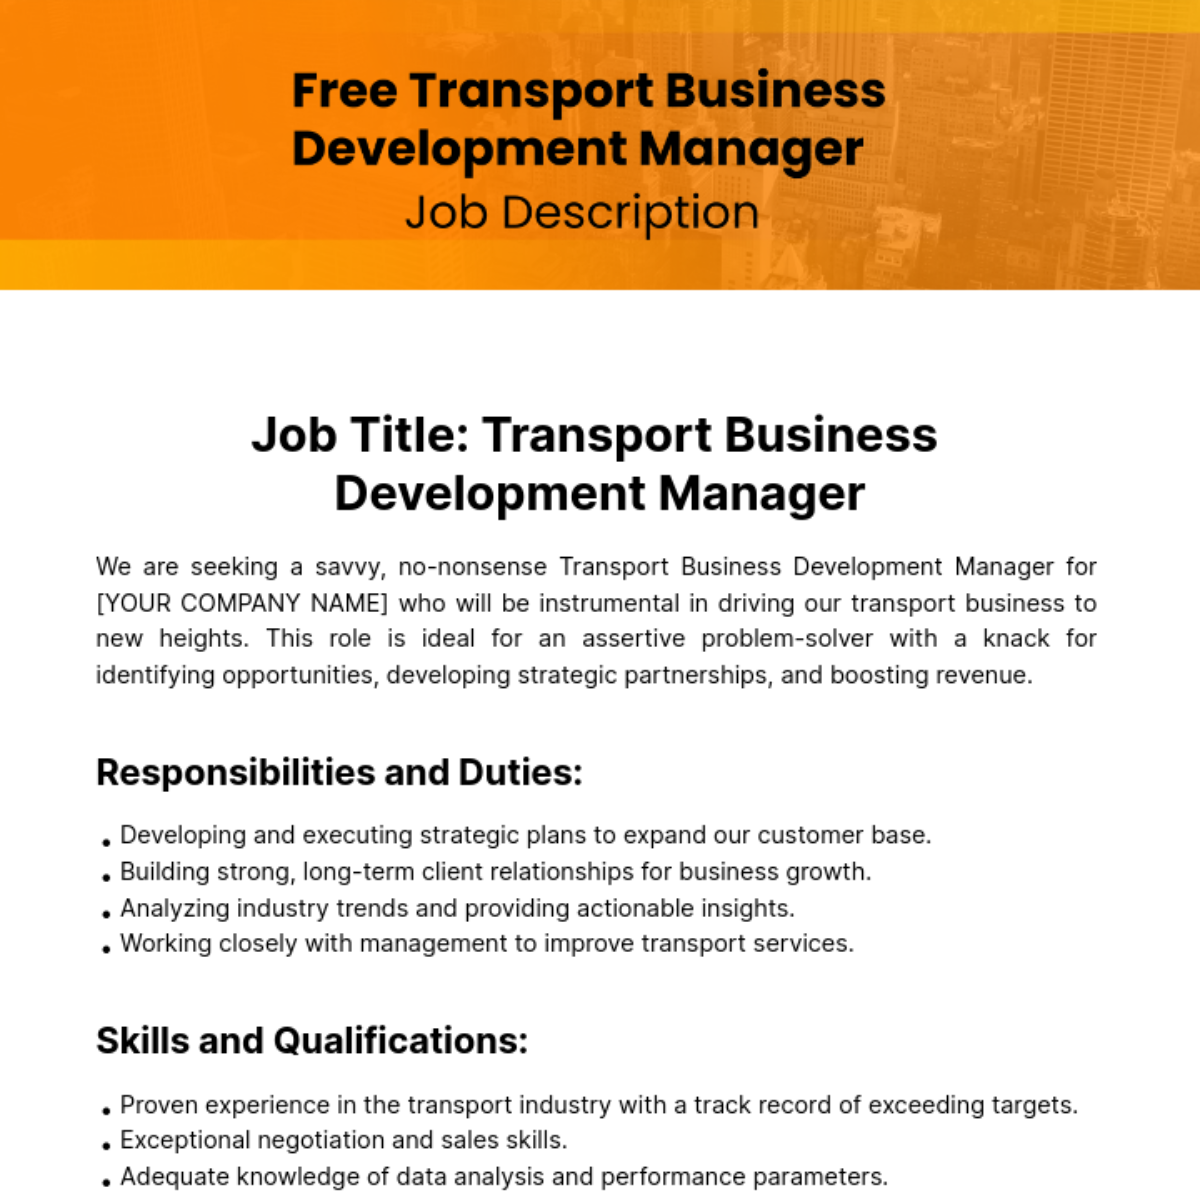 Transport Business Development Manager Job Description Template